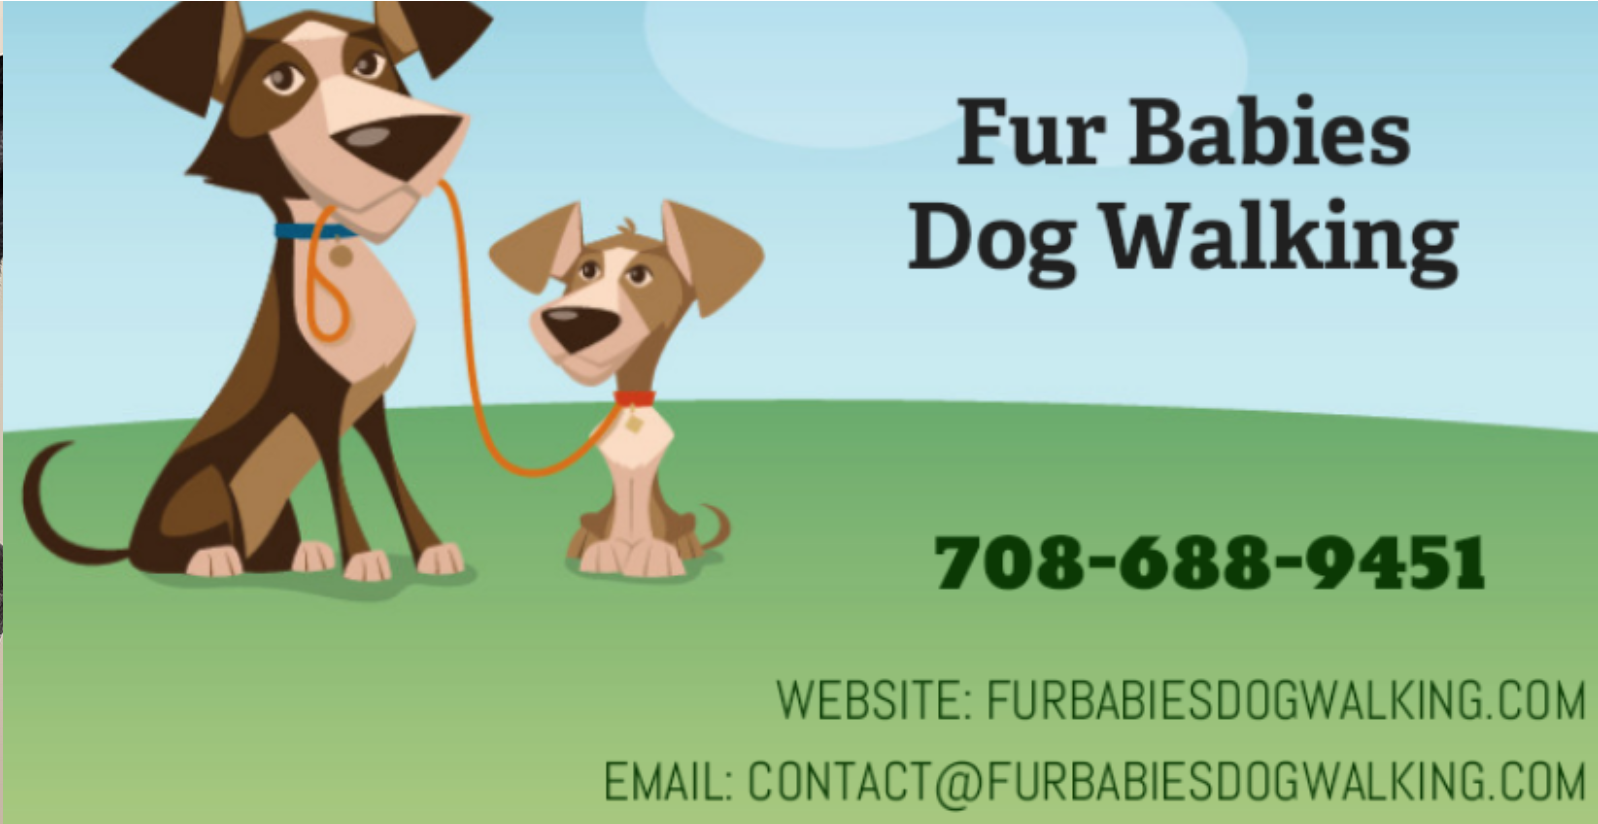 Fur Babies Dog Walking Services in La Grange, Brookfield, La Grange Park